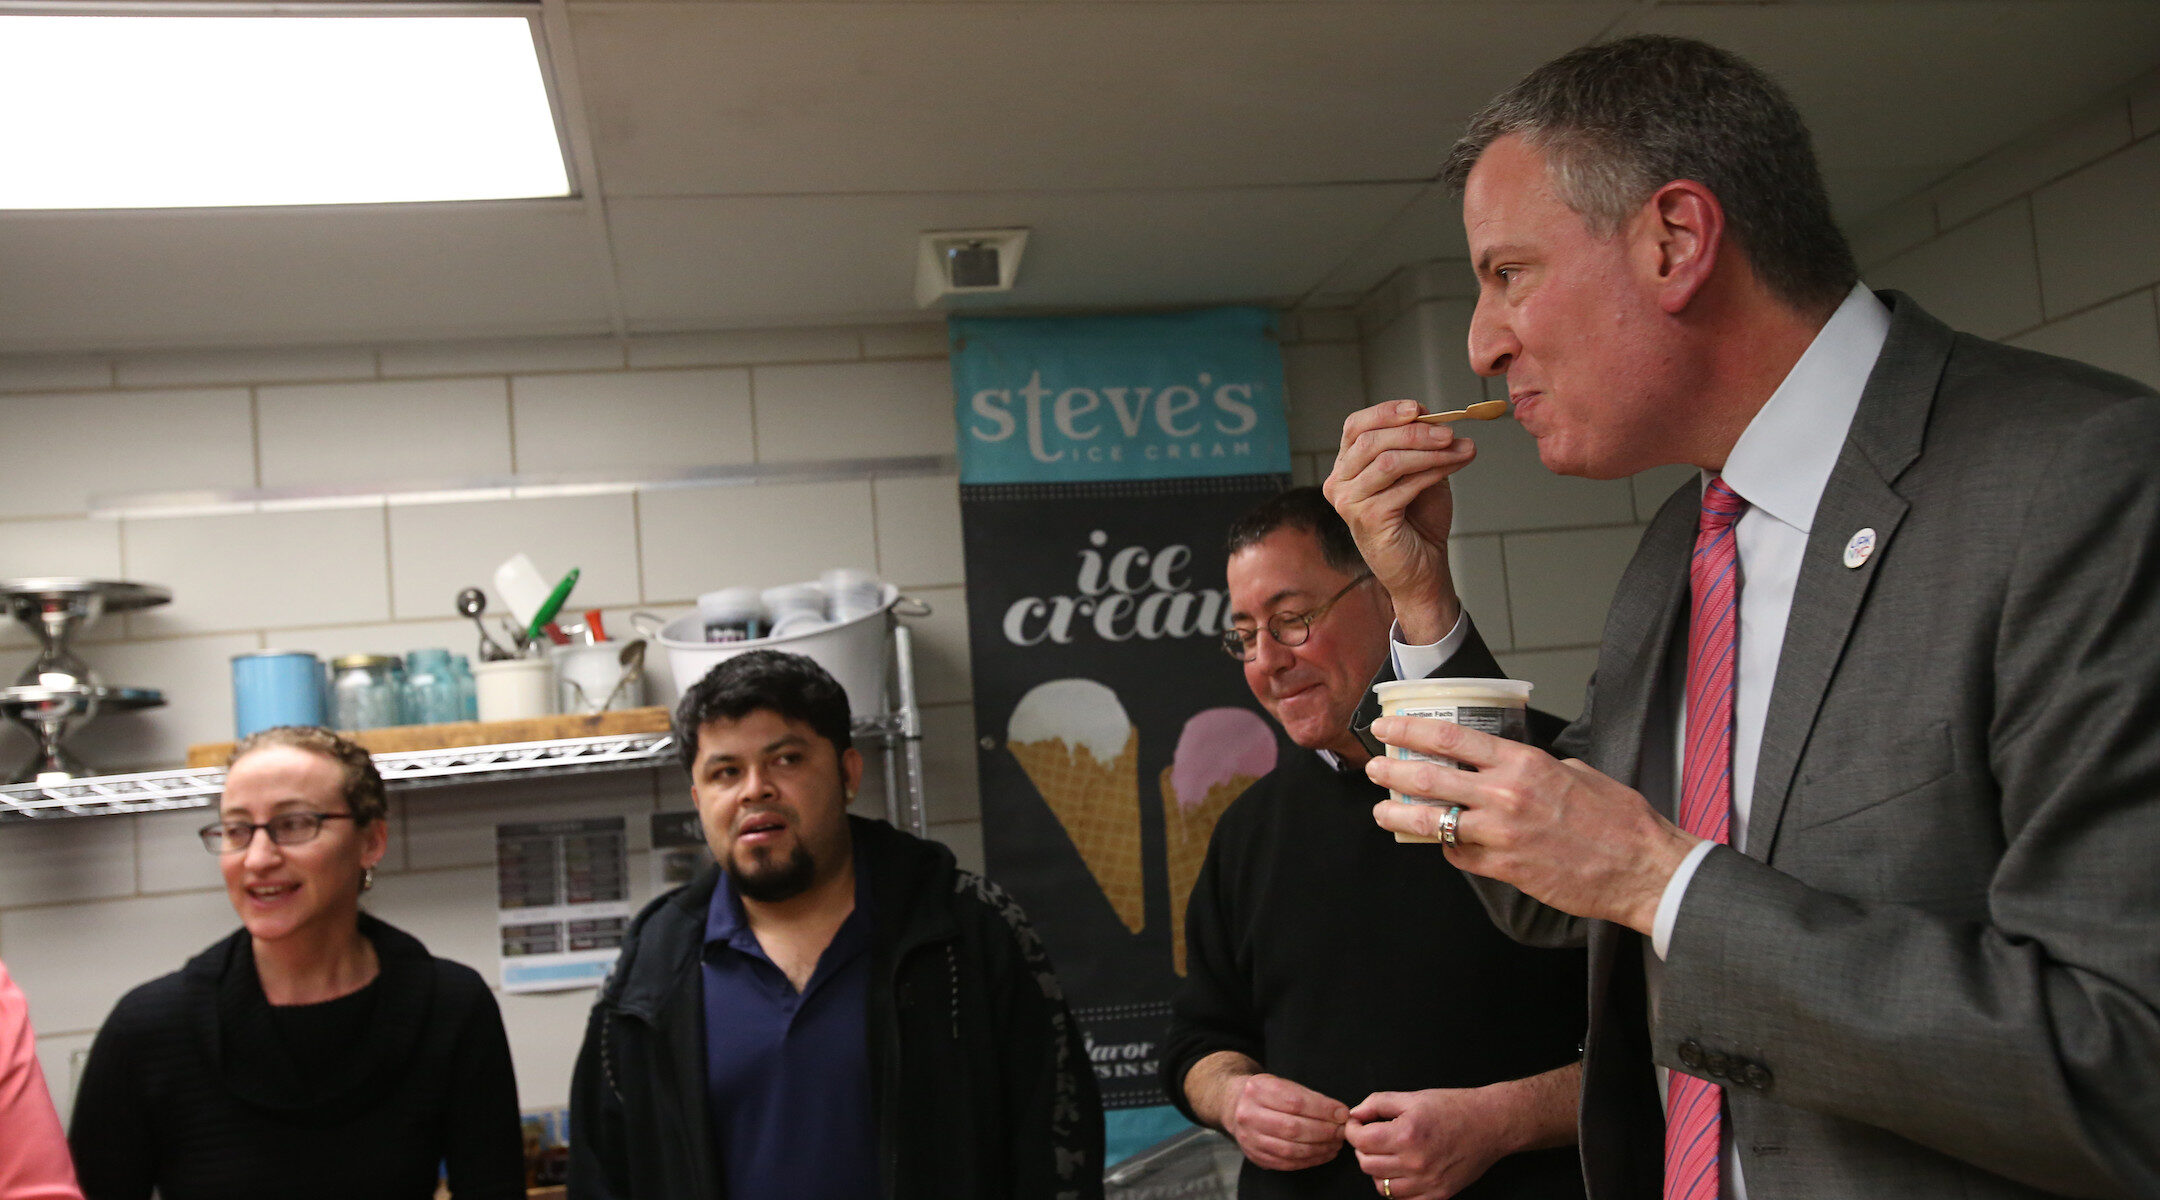 Mayor Bill de Blasio samples ice cream (not Ben & Jerry's) at Steve’s Craft Ice Cream in Brooklyn on March 20, 2014. (Rob Bennett for the Office of Mayor Bill de Blasio)